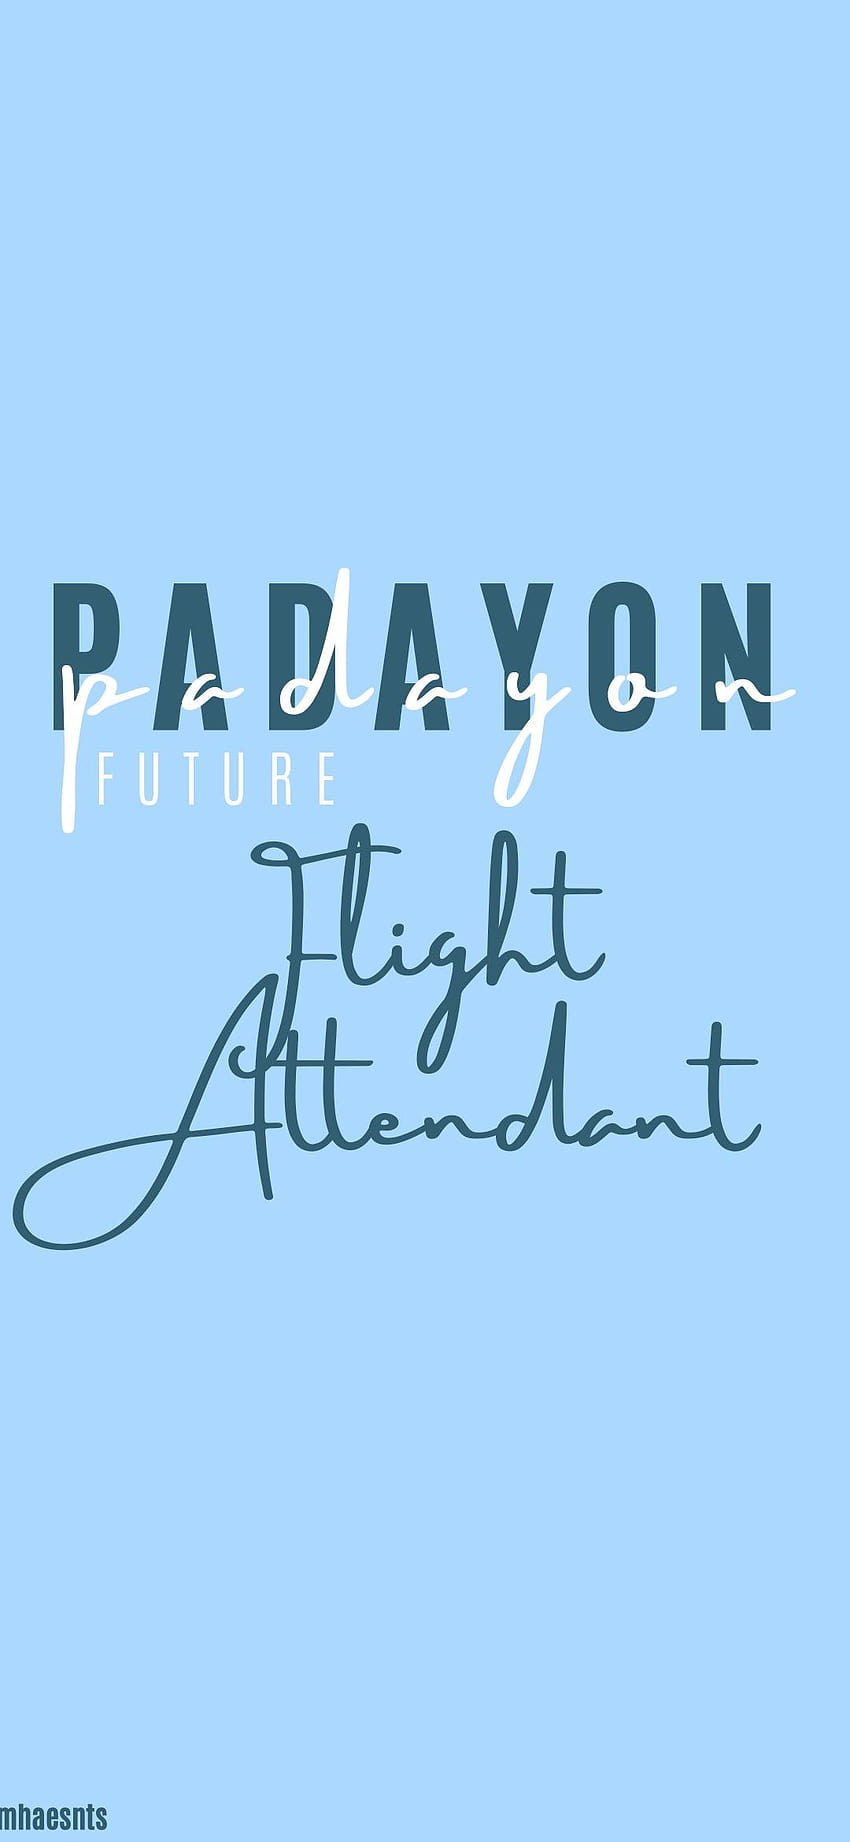 Padayon!!! Future Flight Attendant in 2020 HD phone wallpaper